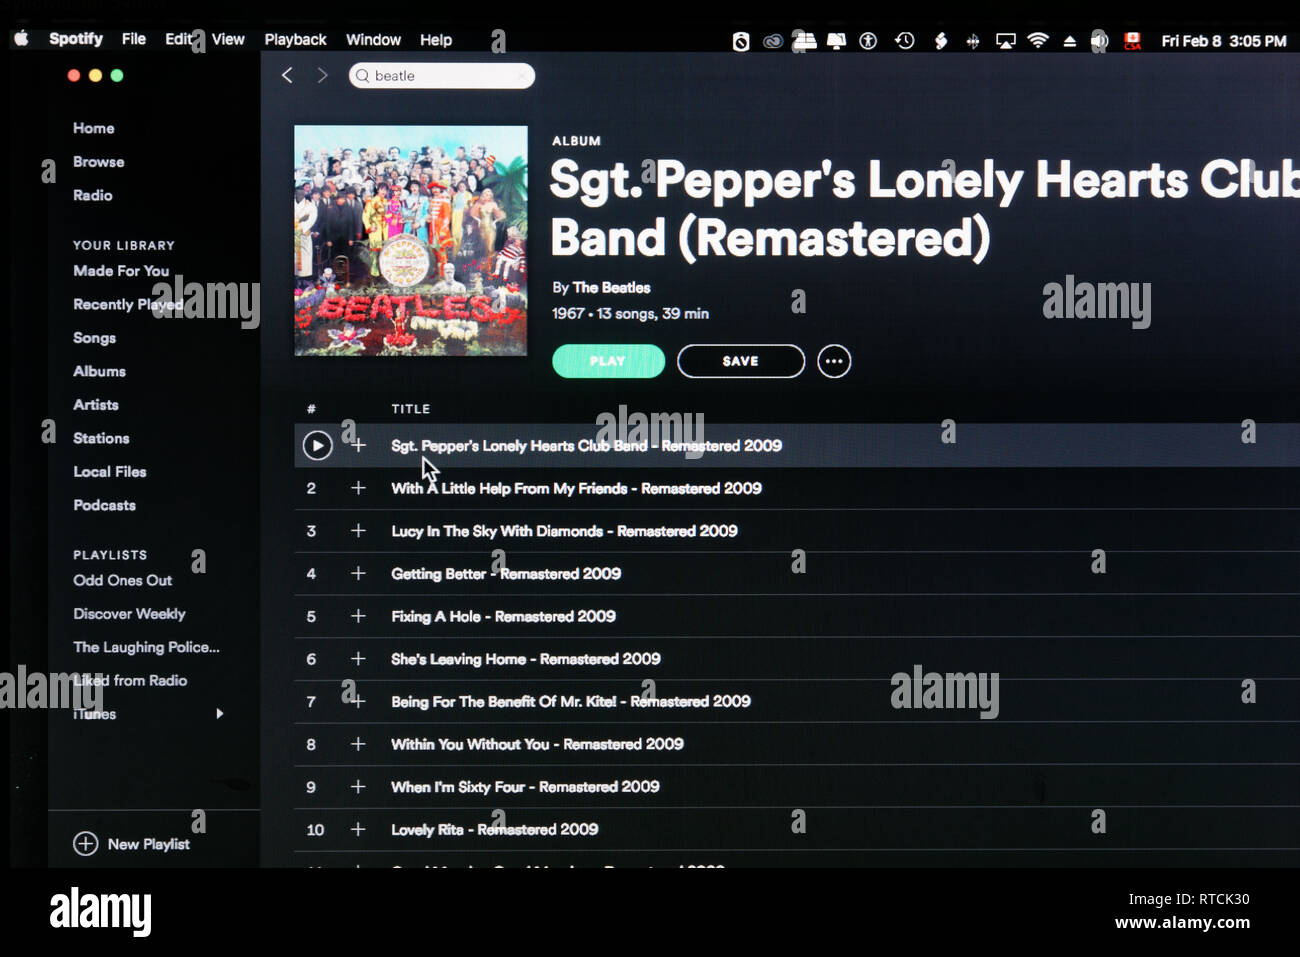 L'album des Beatles Sgt Pepper's Lonely Hearts Club Band page web Spotify Banque D'Images